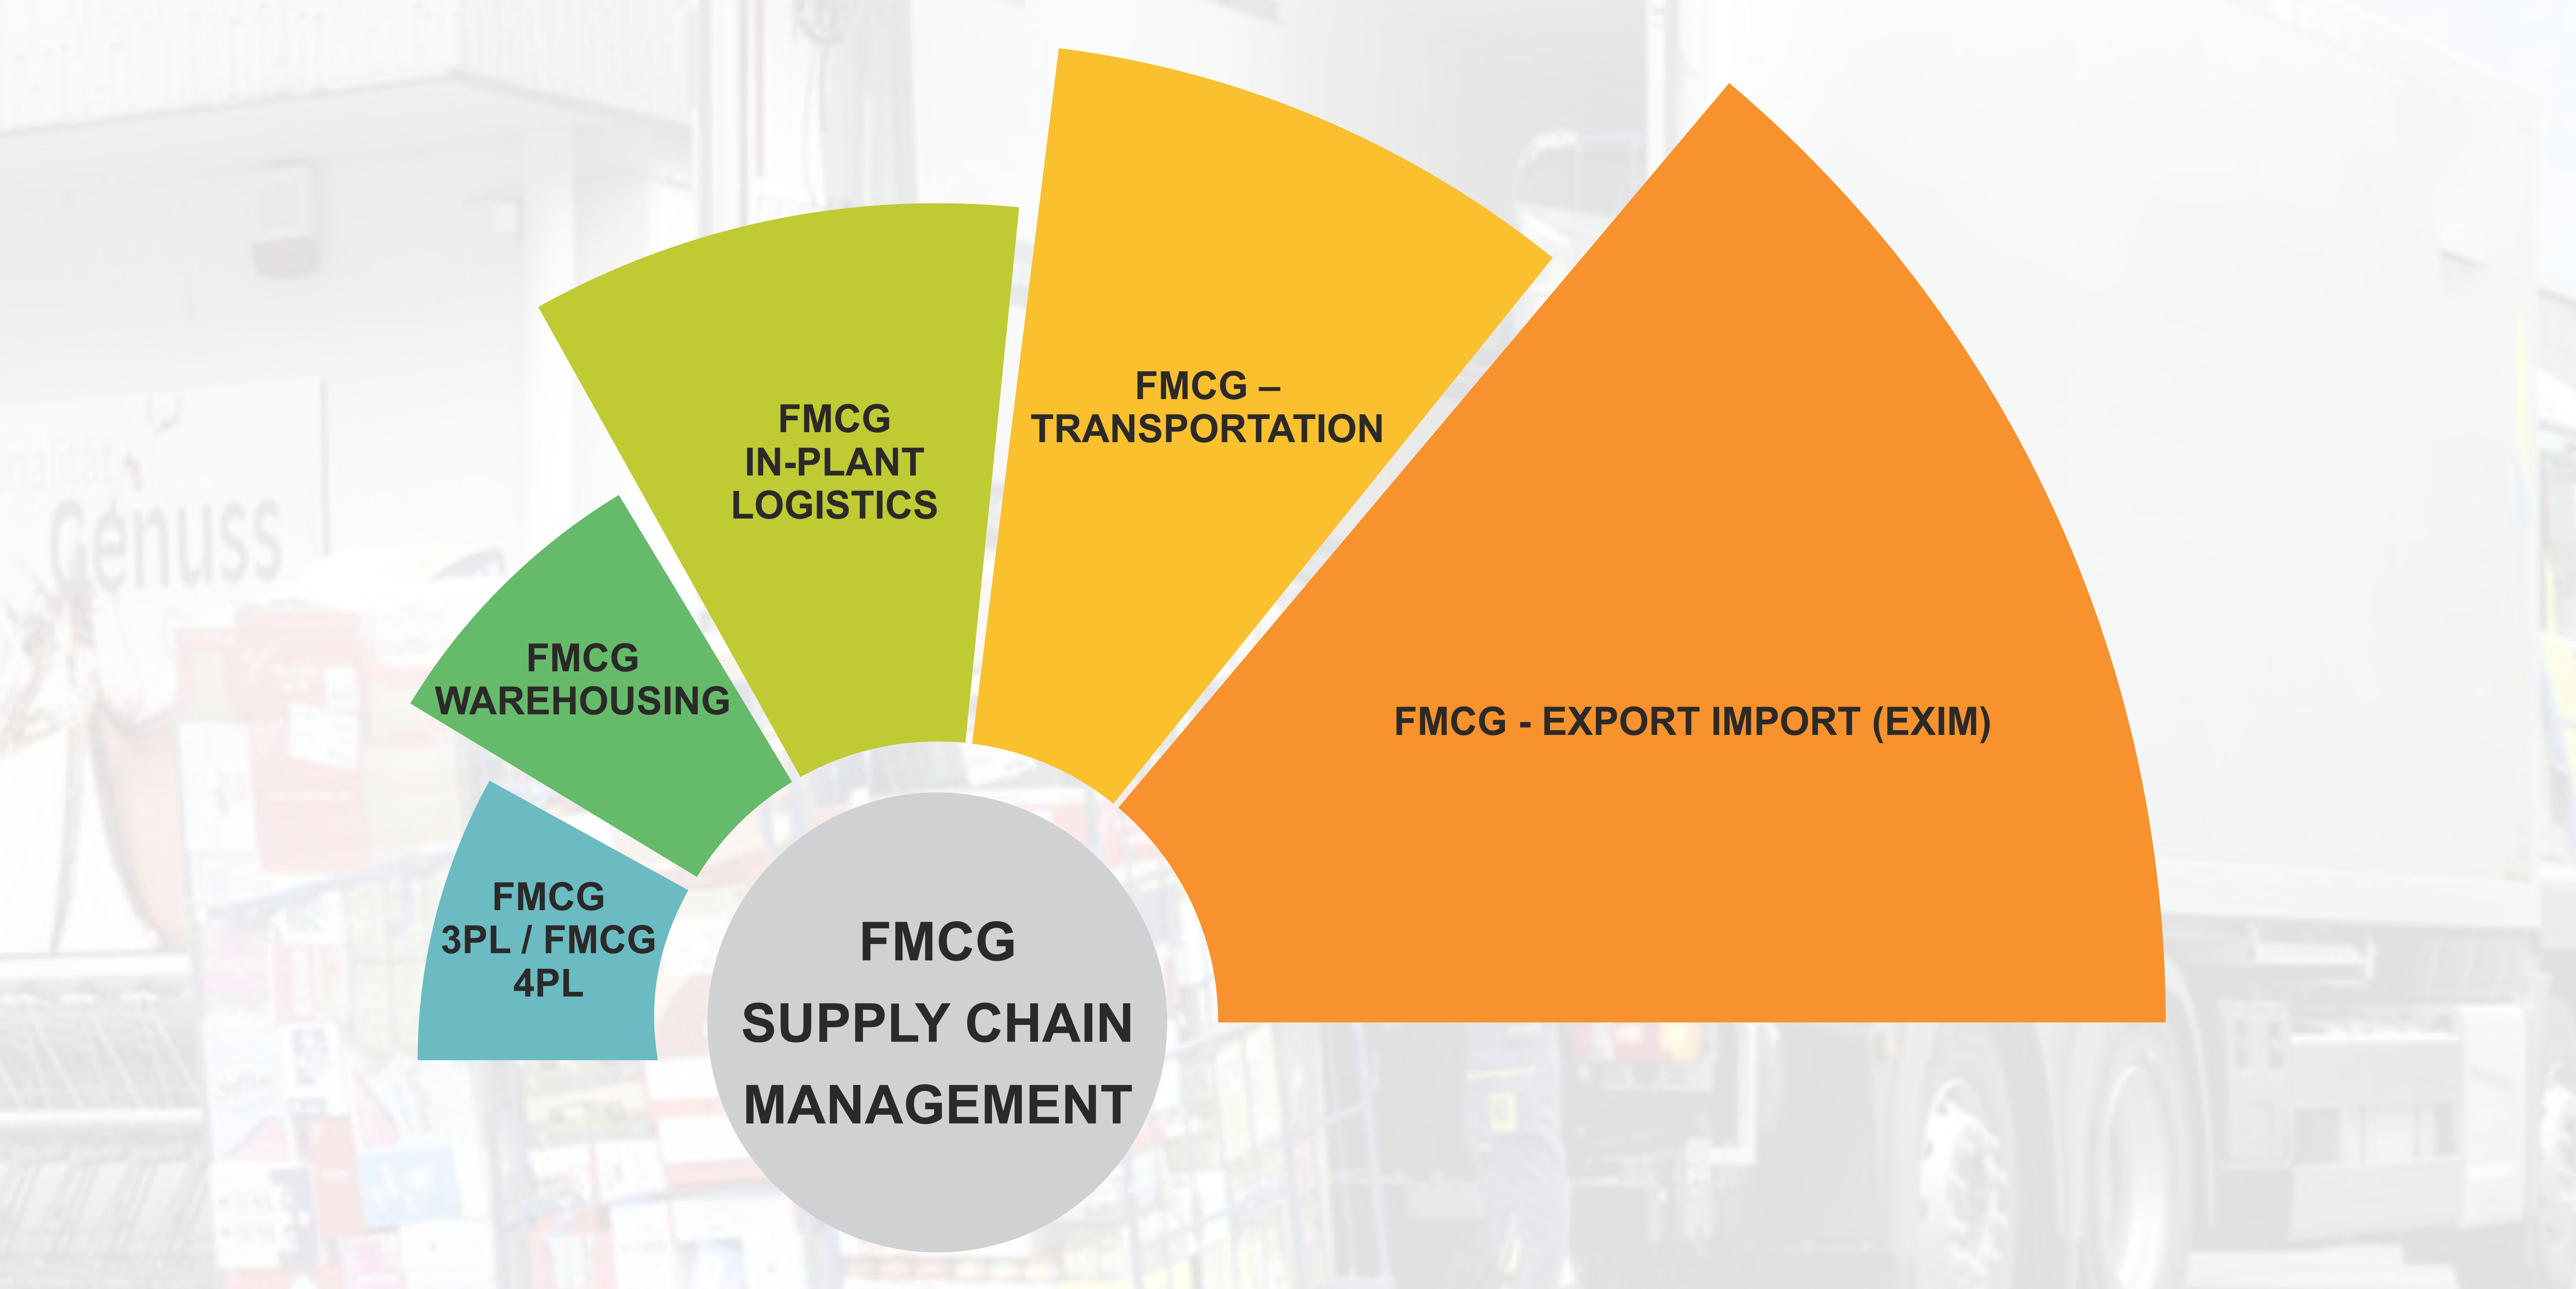 FMCG Supply CHain Management, 
      FMCG 3PL/ FMCG 4PL,FMCG Warehousing,FMCG In-plant Logistics,
      FMCG-Transportation,FMCG-Export Import